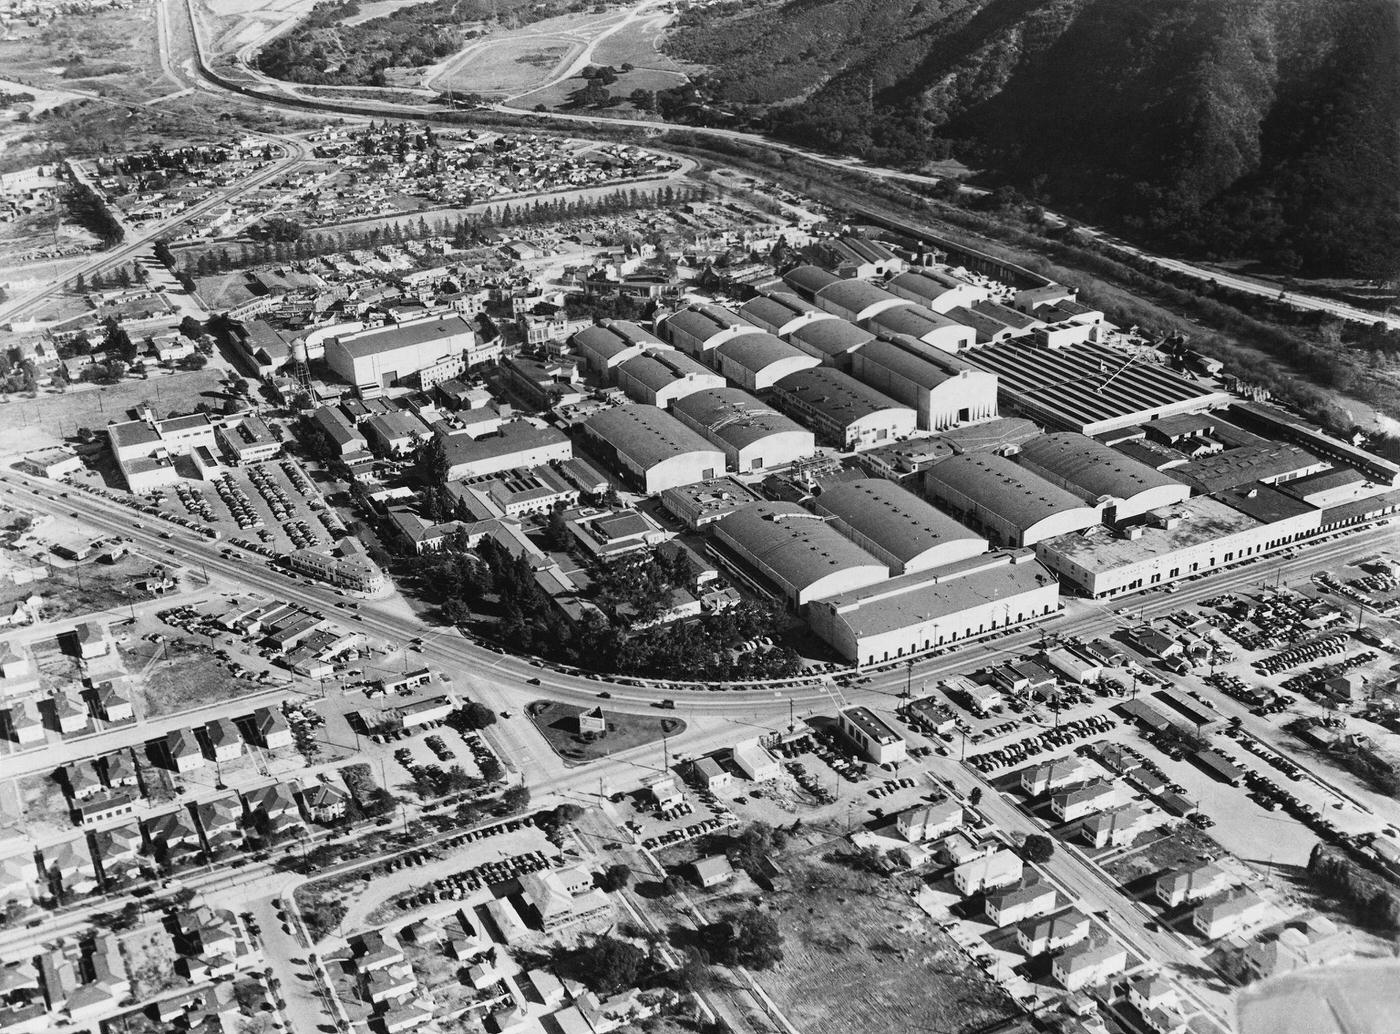 Aerial view of Warner Brothers Studios - undated.